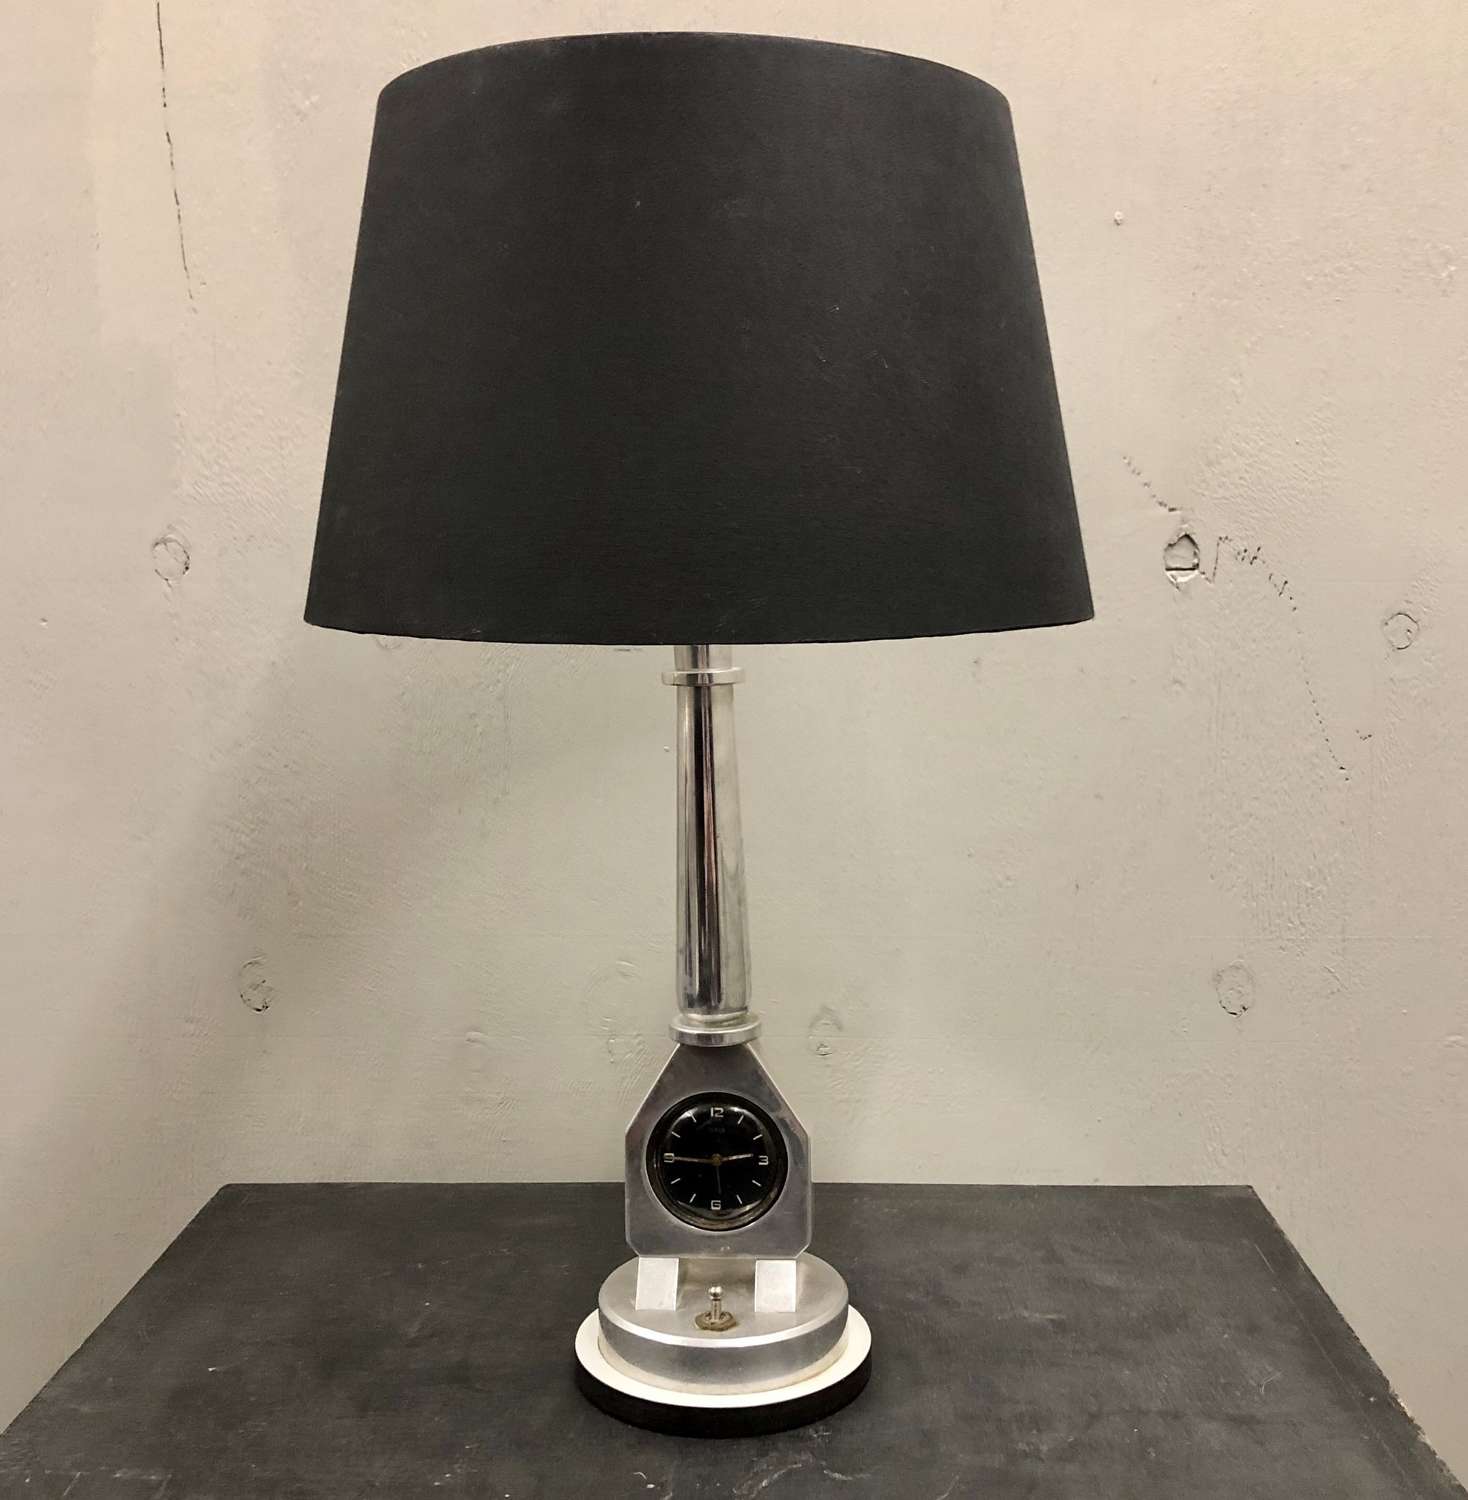 A rare Oris Automobilia Table lamp